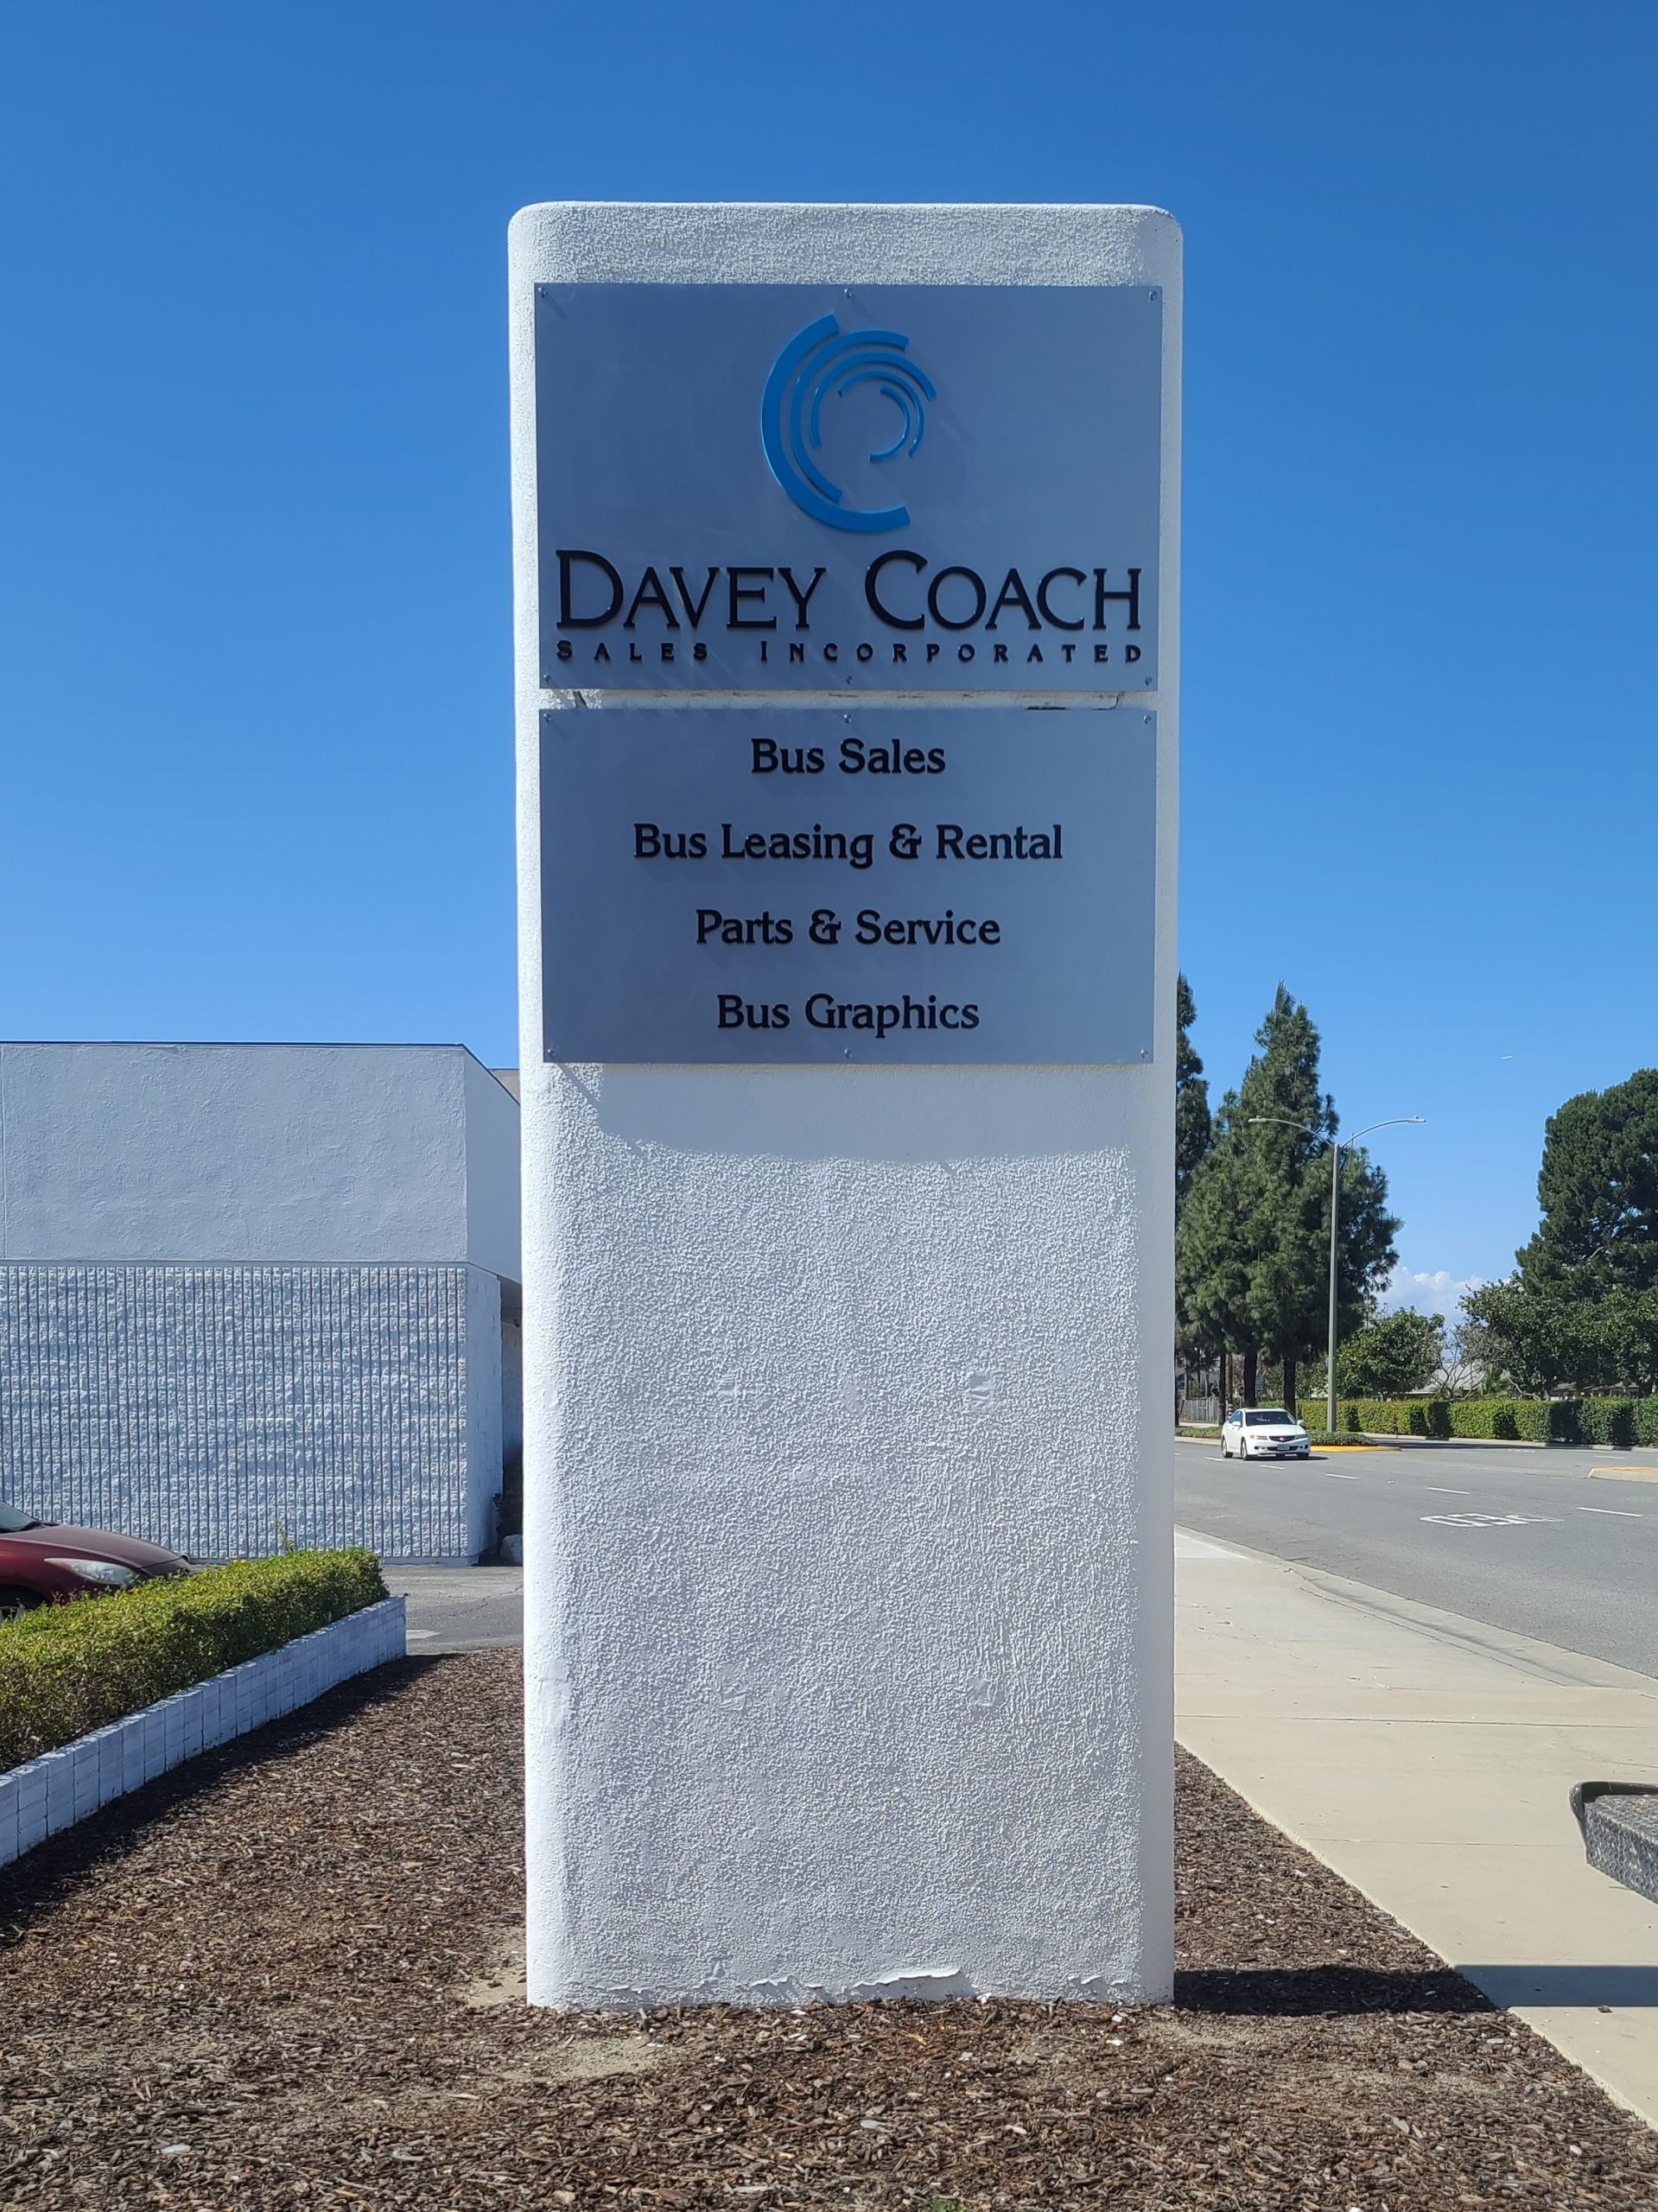 Dimensional letters business sign package for Davey Coach's Norwalk establishment.